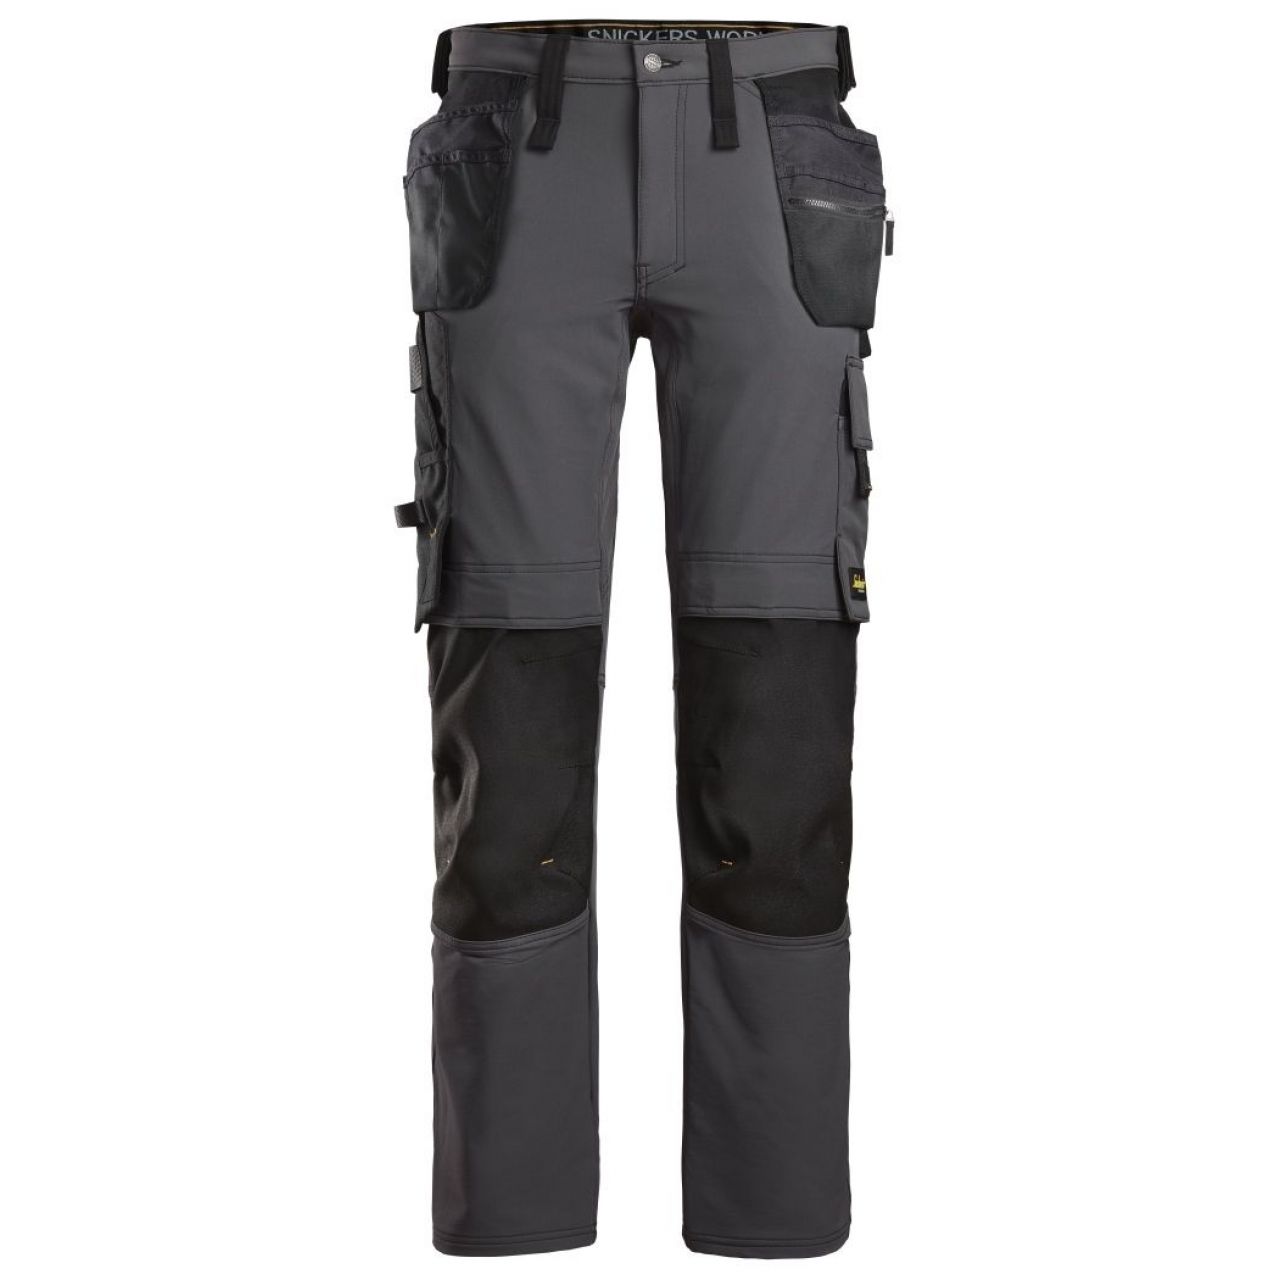 Pantalon elastico AllroundWork bolsillos flotantes gris acero-negro talla 064